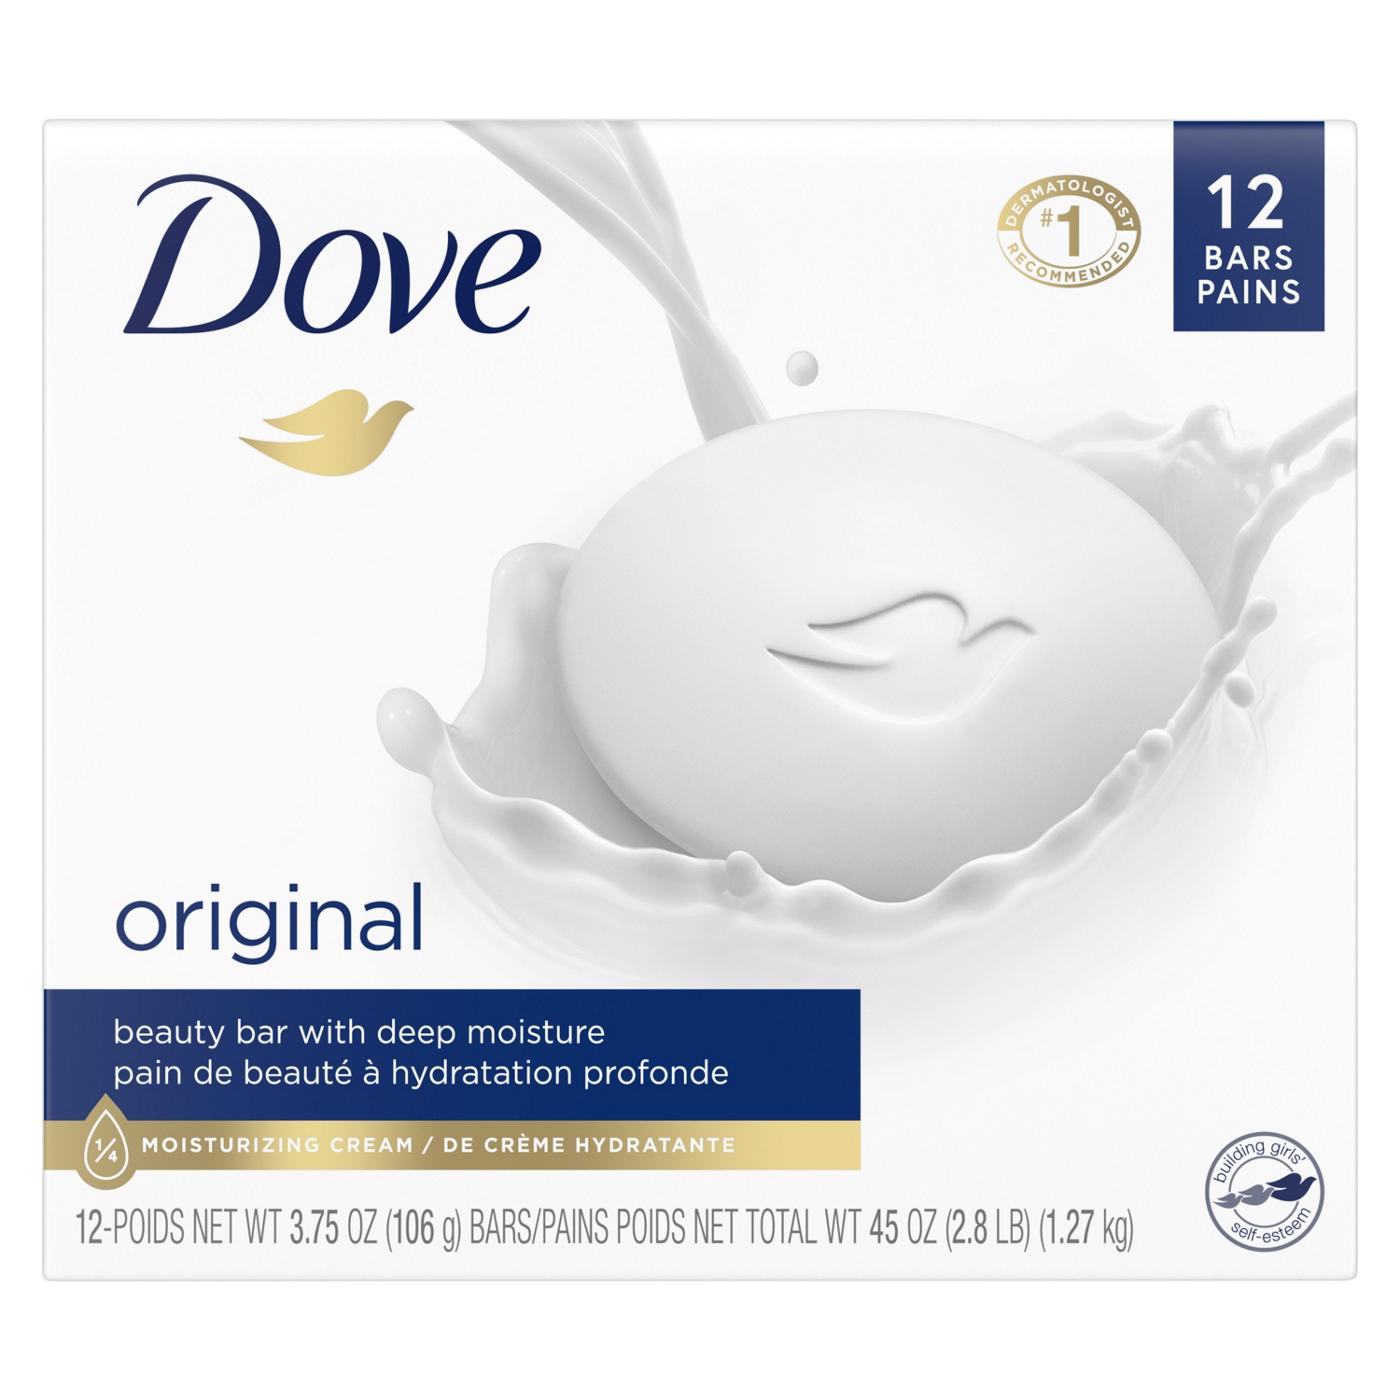 Dove Men Soap Bar + Care Extra Fresh, 14 ct